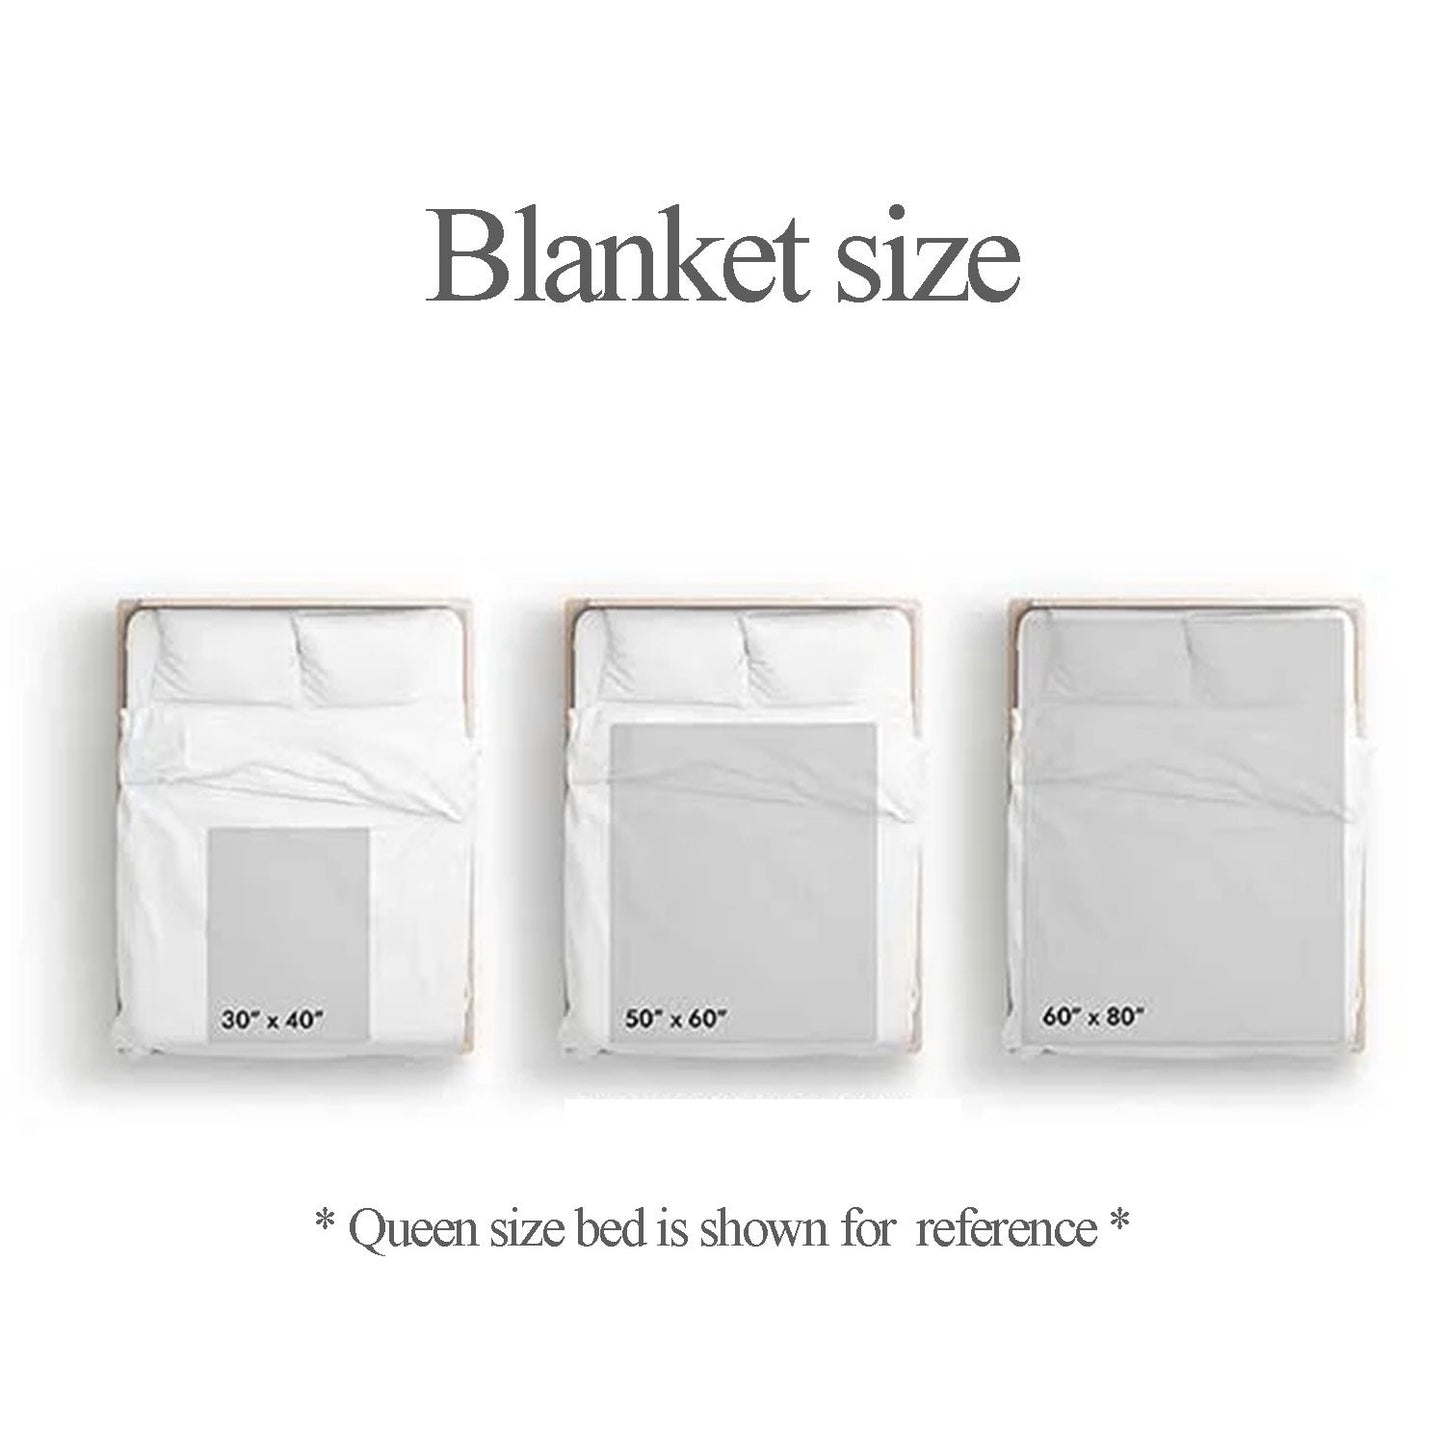 Personalize blanket, Minky or Sherpa custom blanket, Baby blanket, Kids name Blanket, birthday gift idea